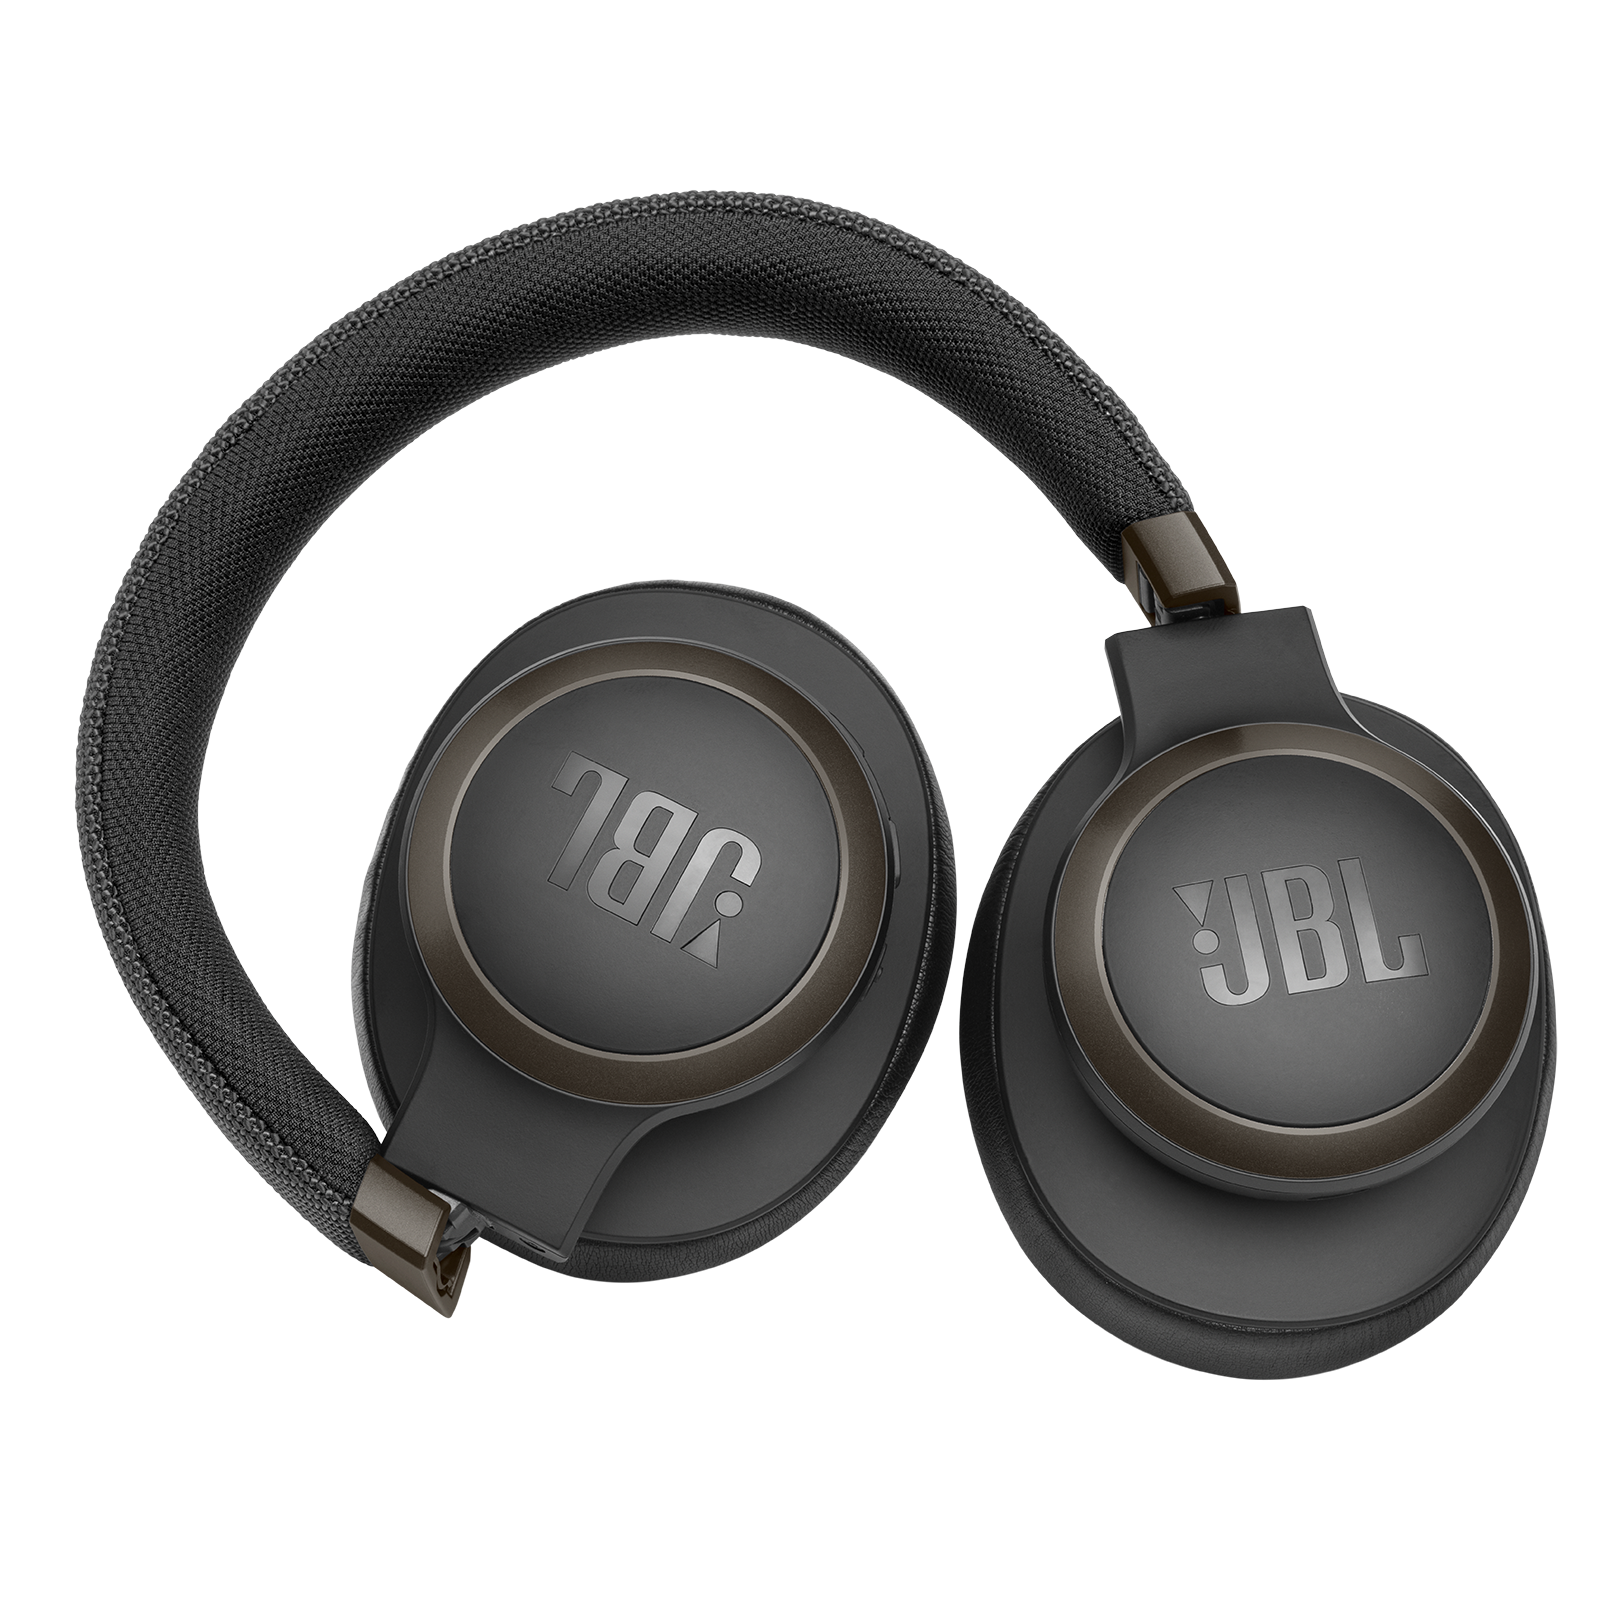 JBL Live 650BTNC - Black - Wireless Over-Ear Noise-Cancelling Headphones - Detailshot 5